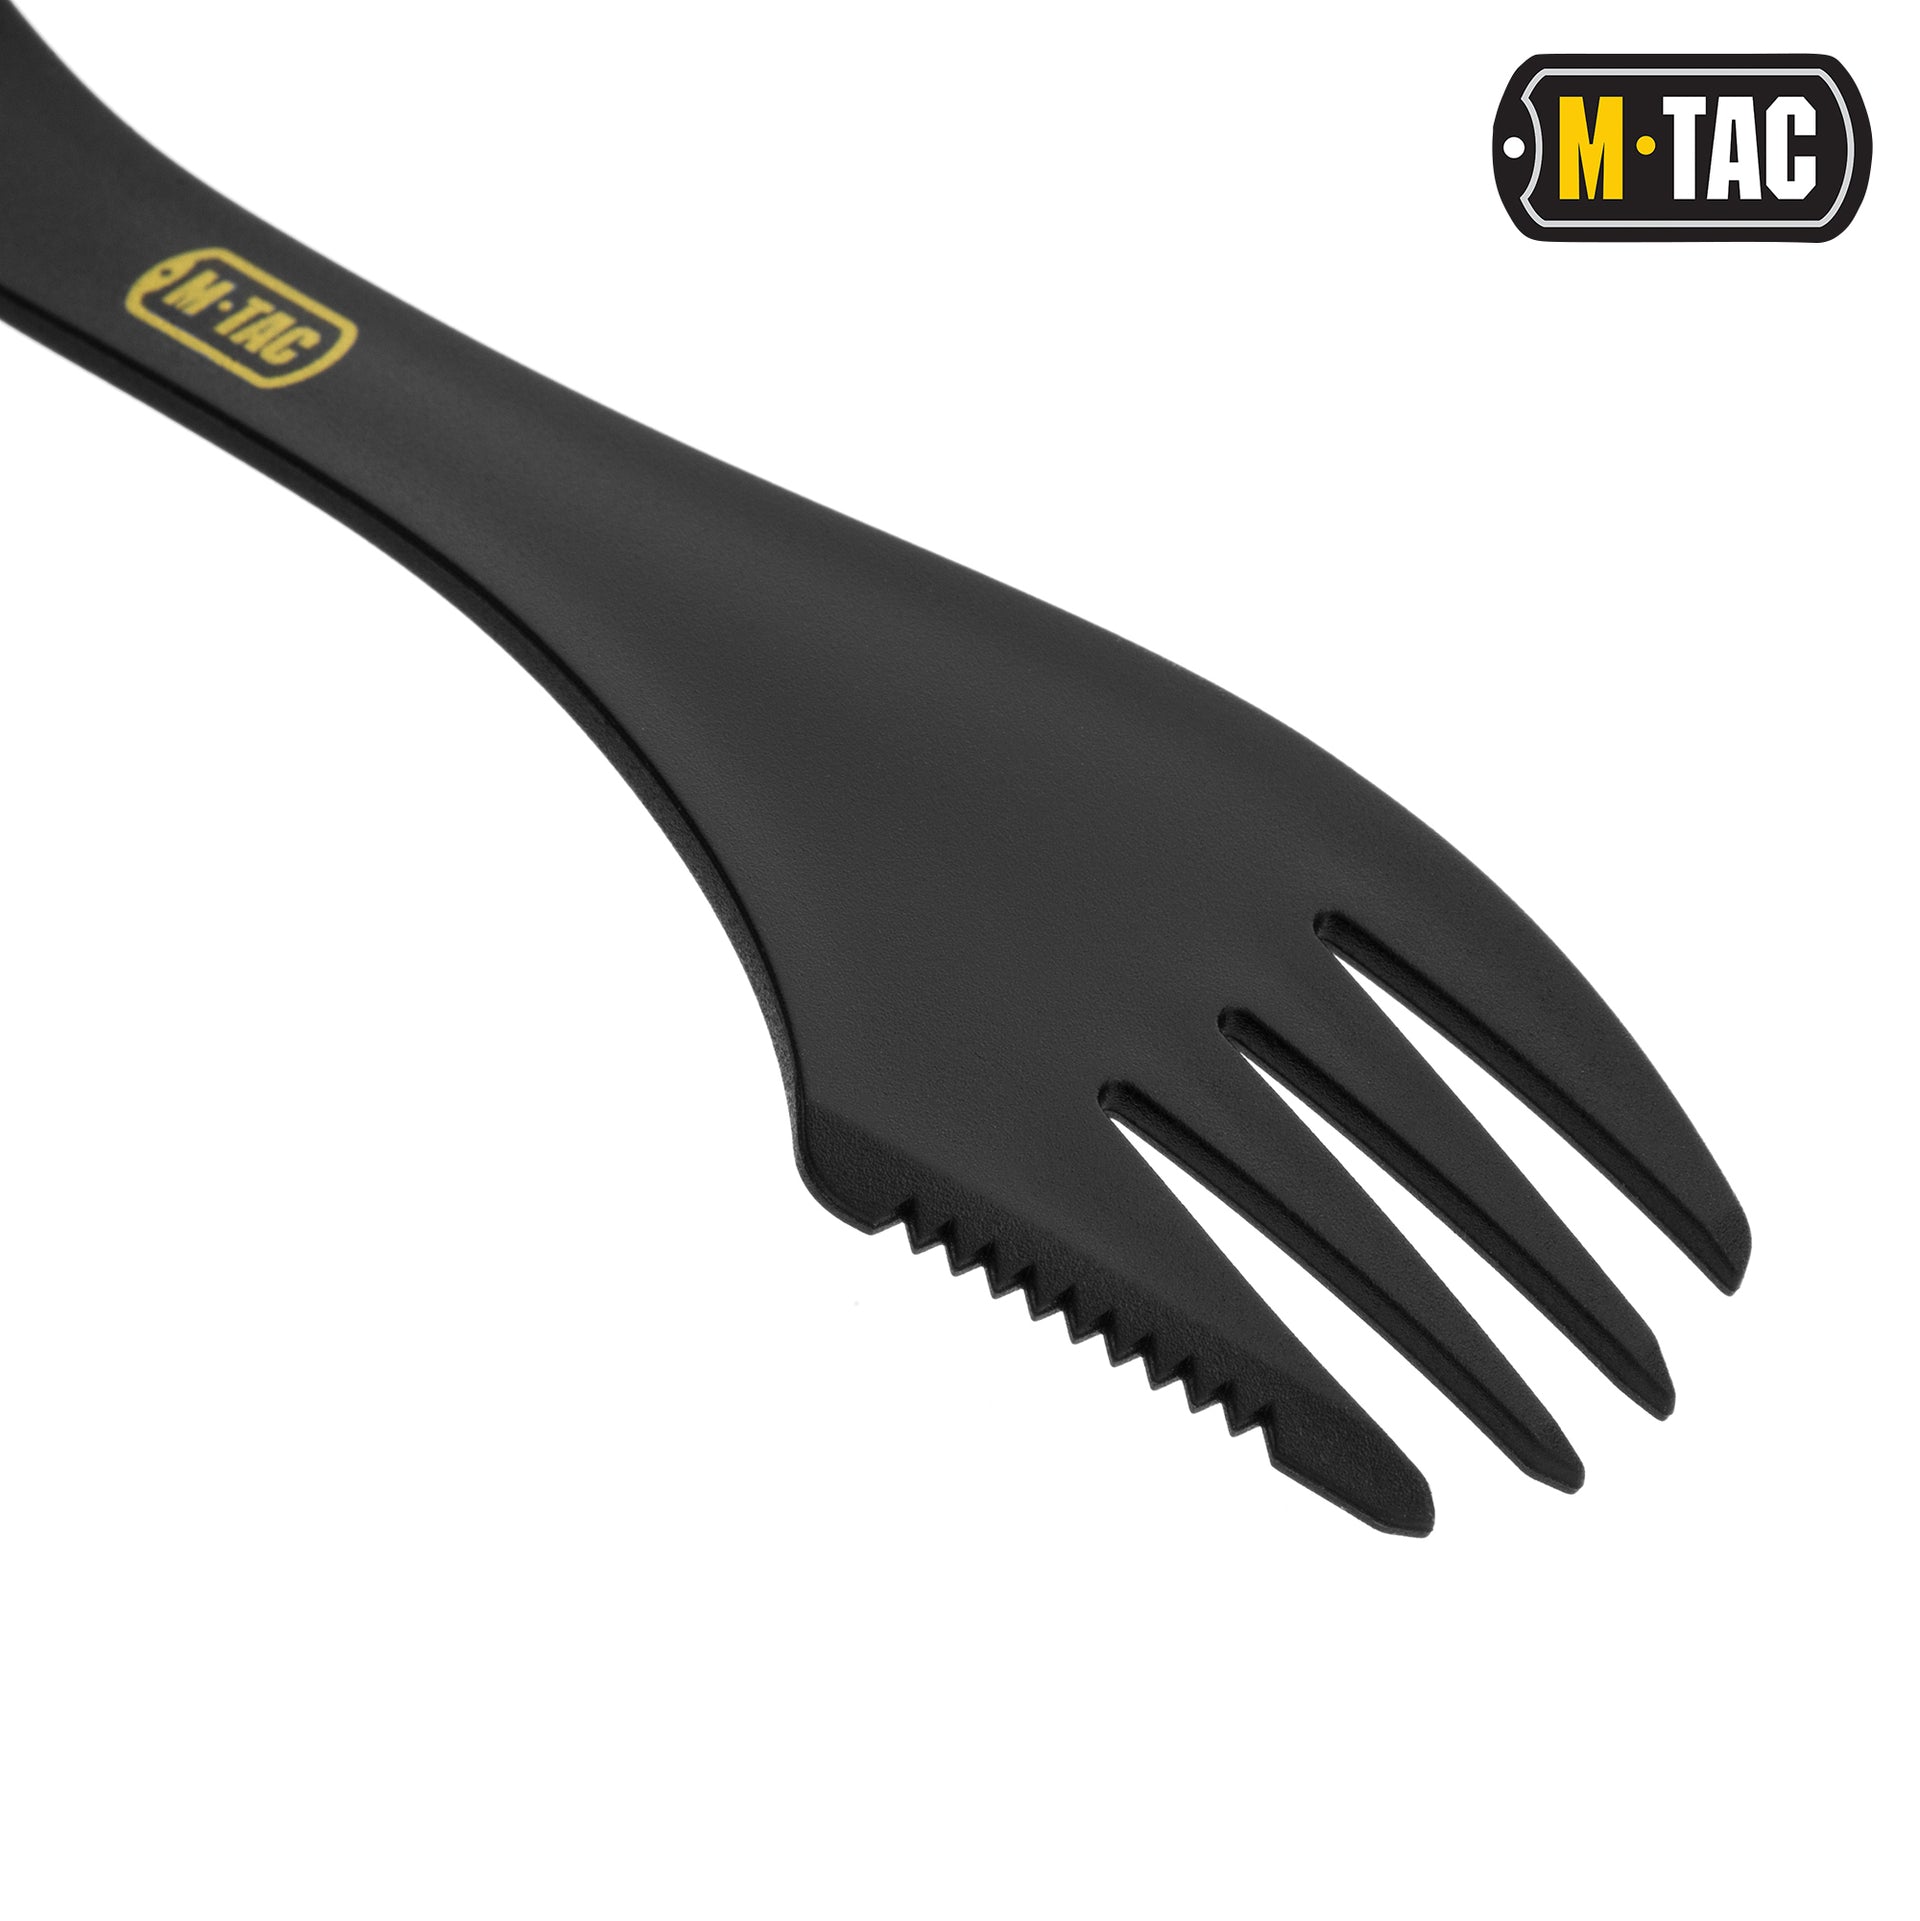 M-Tac Universal Cutlery Black (Set of 10)